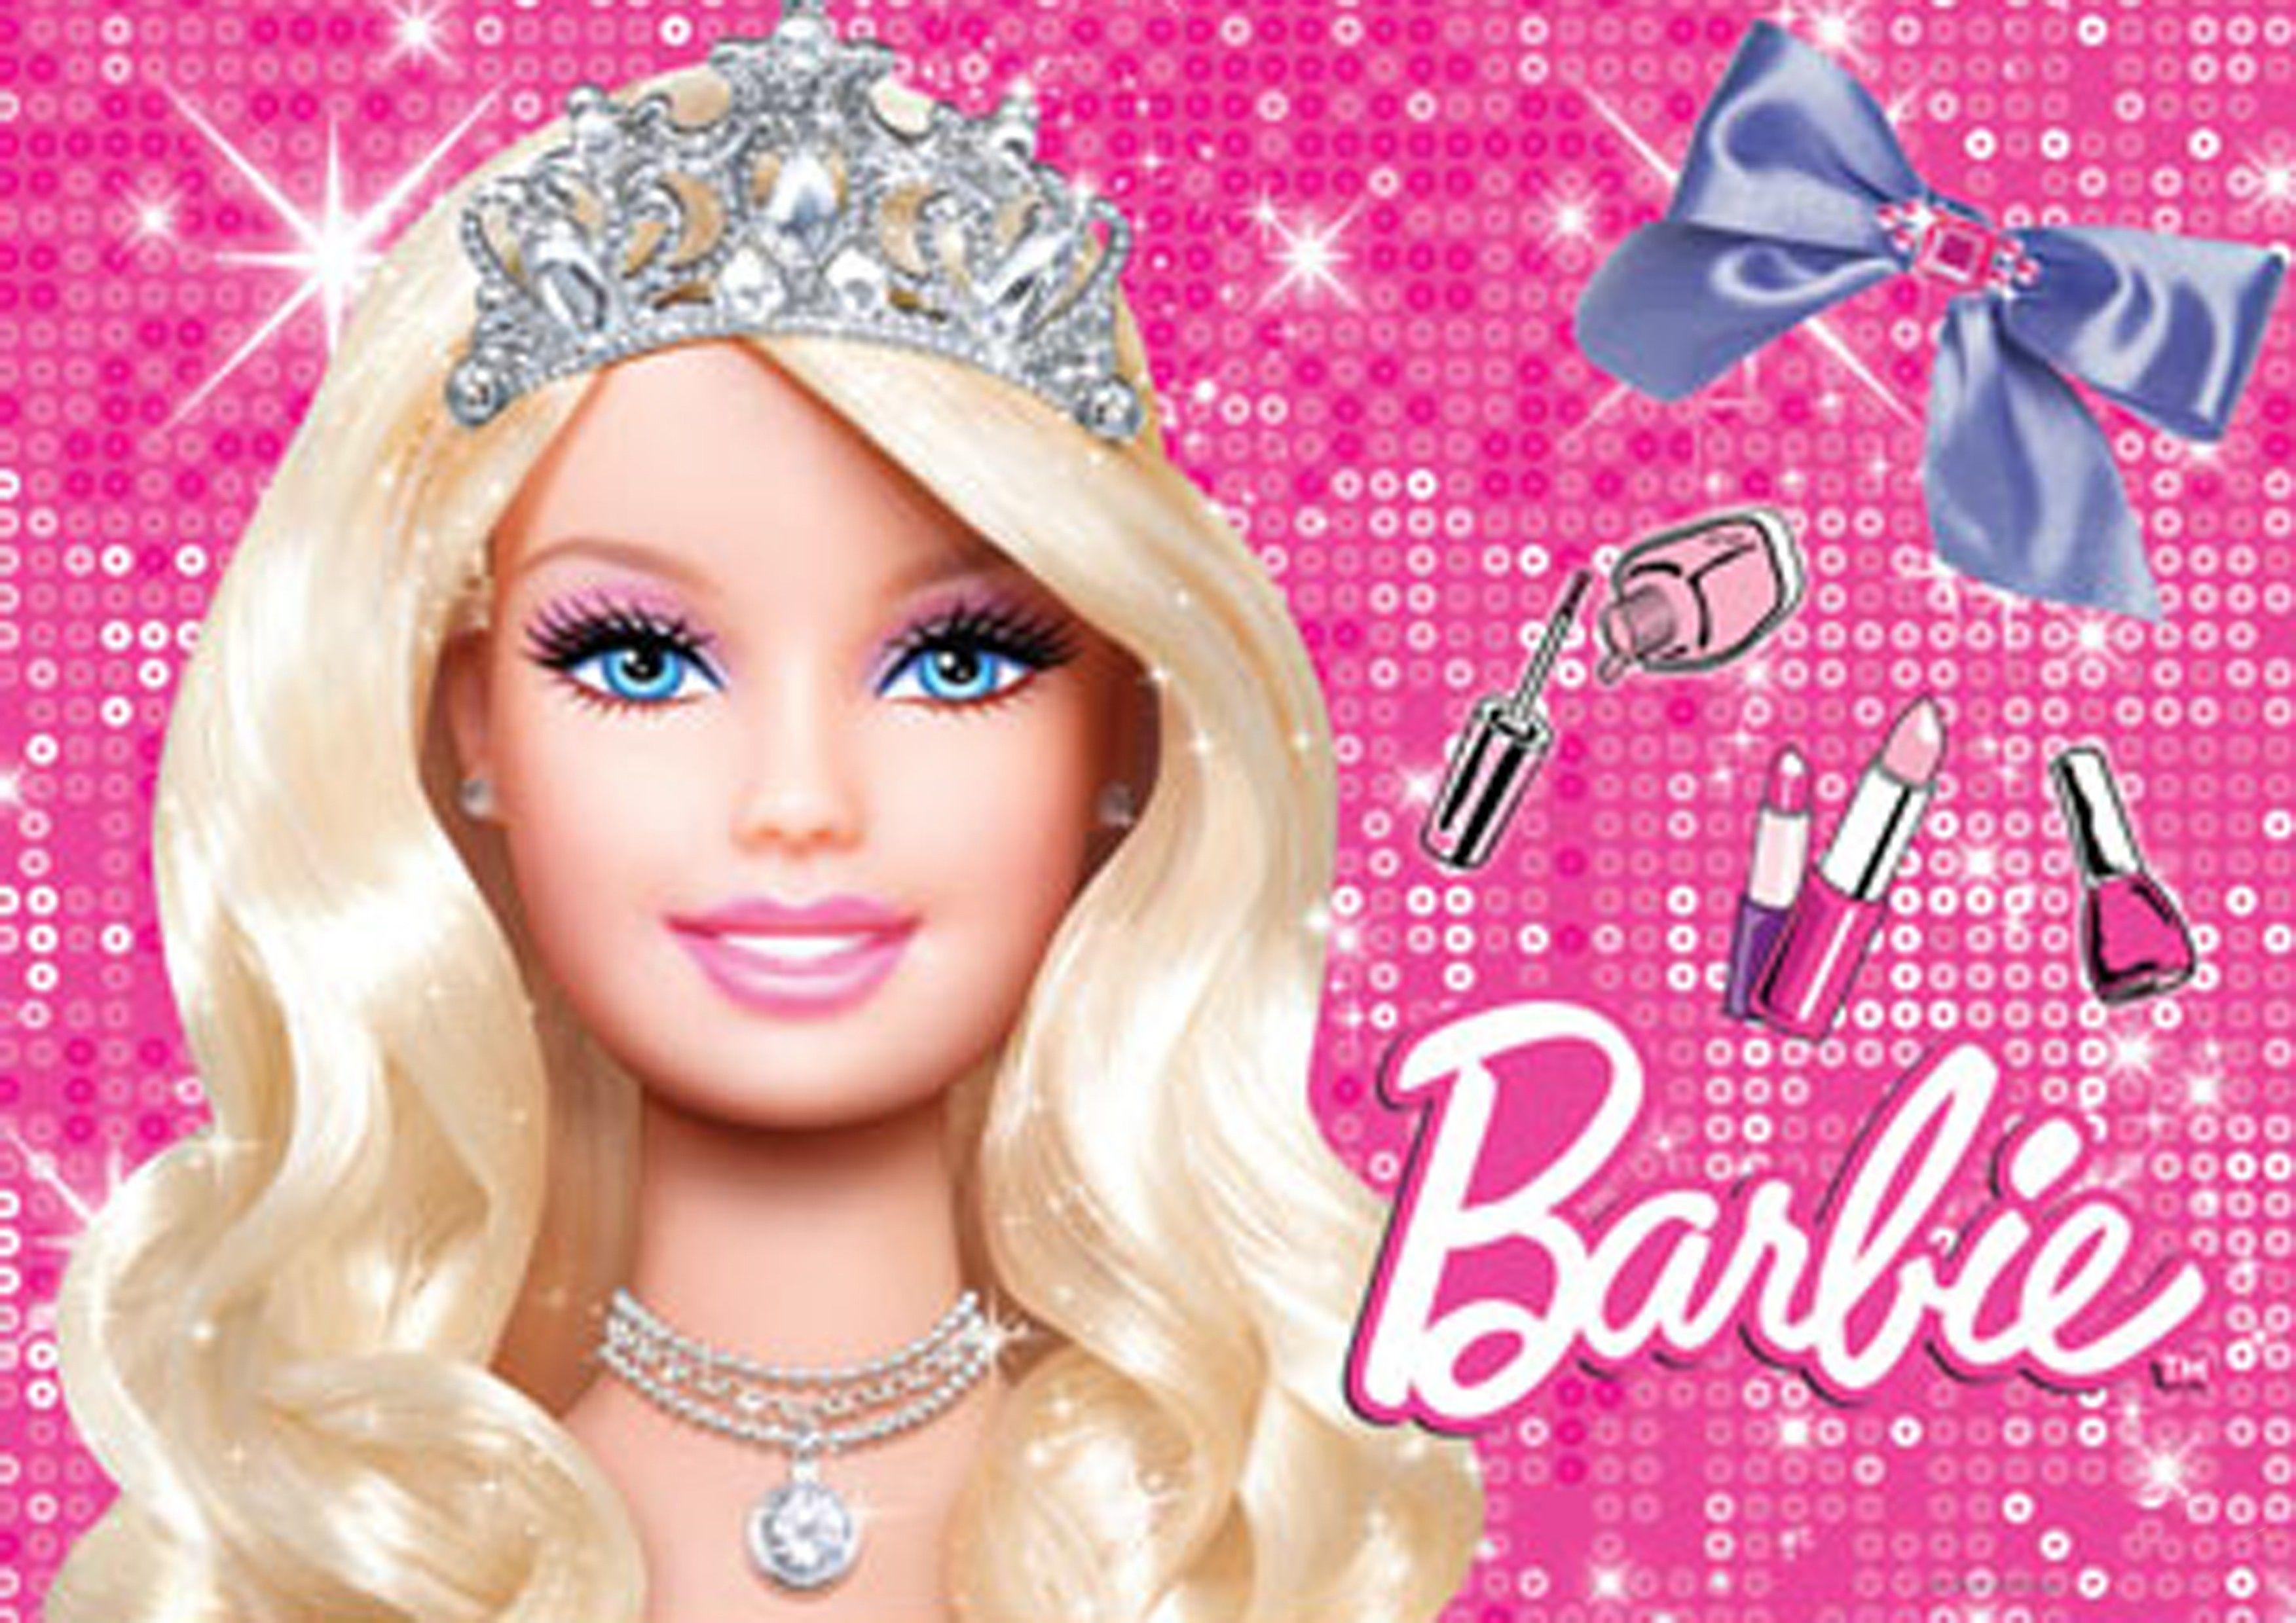 Fashion Barbie Wallpaper For iPad. beauty dresses